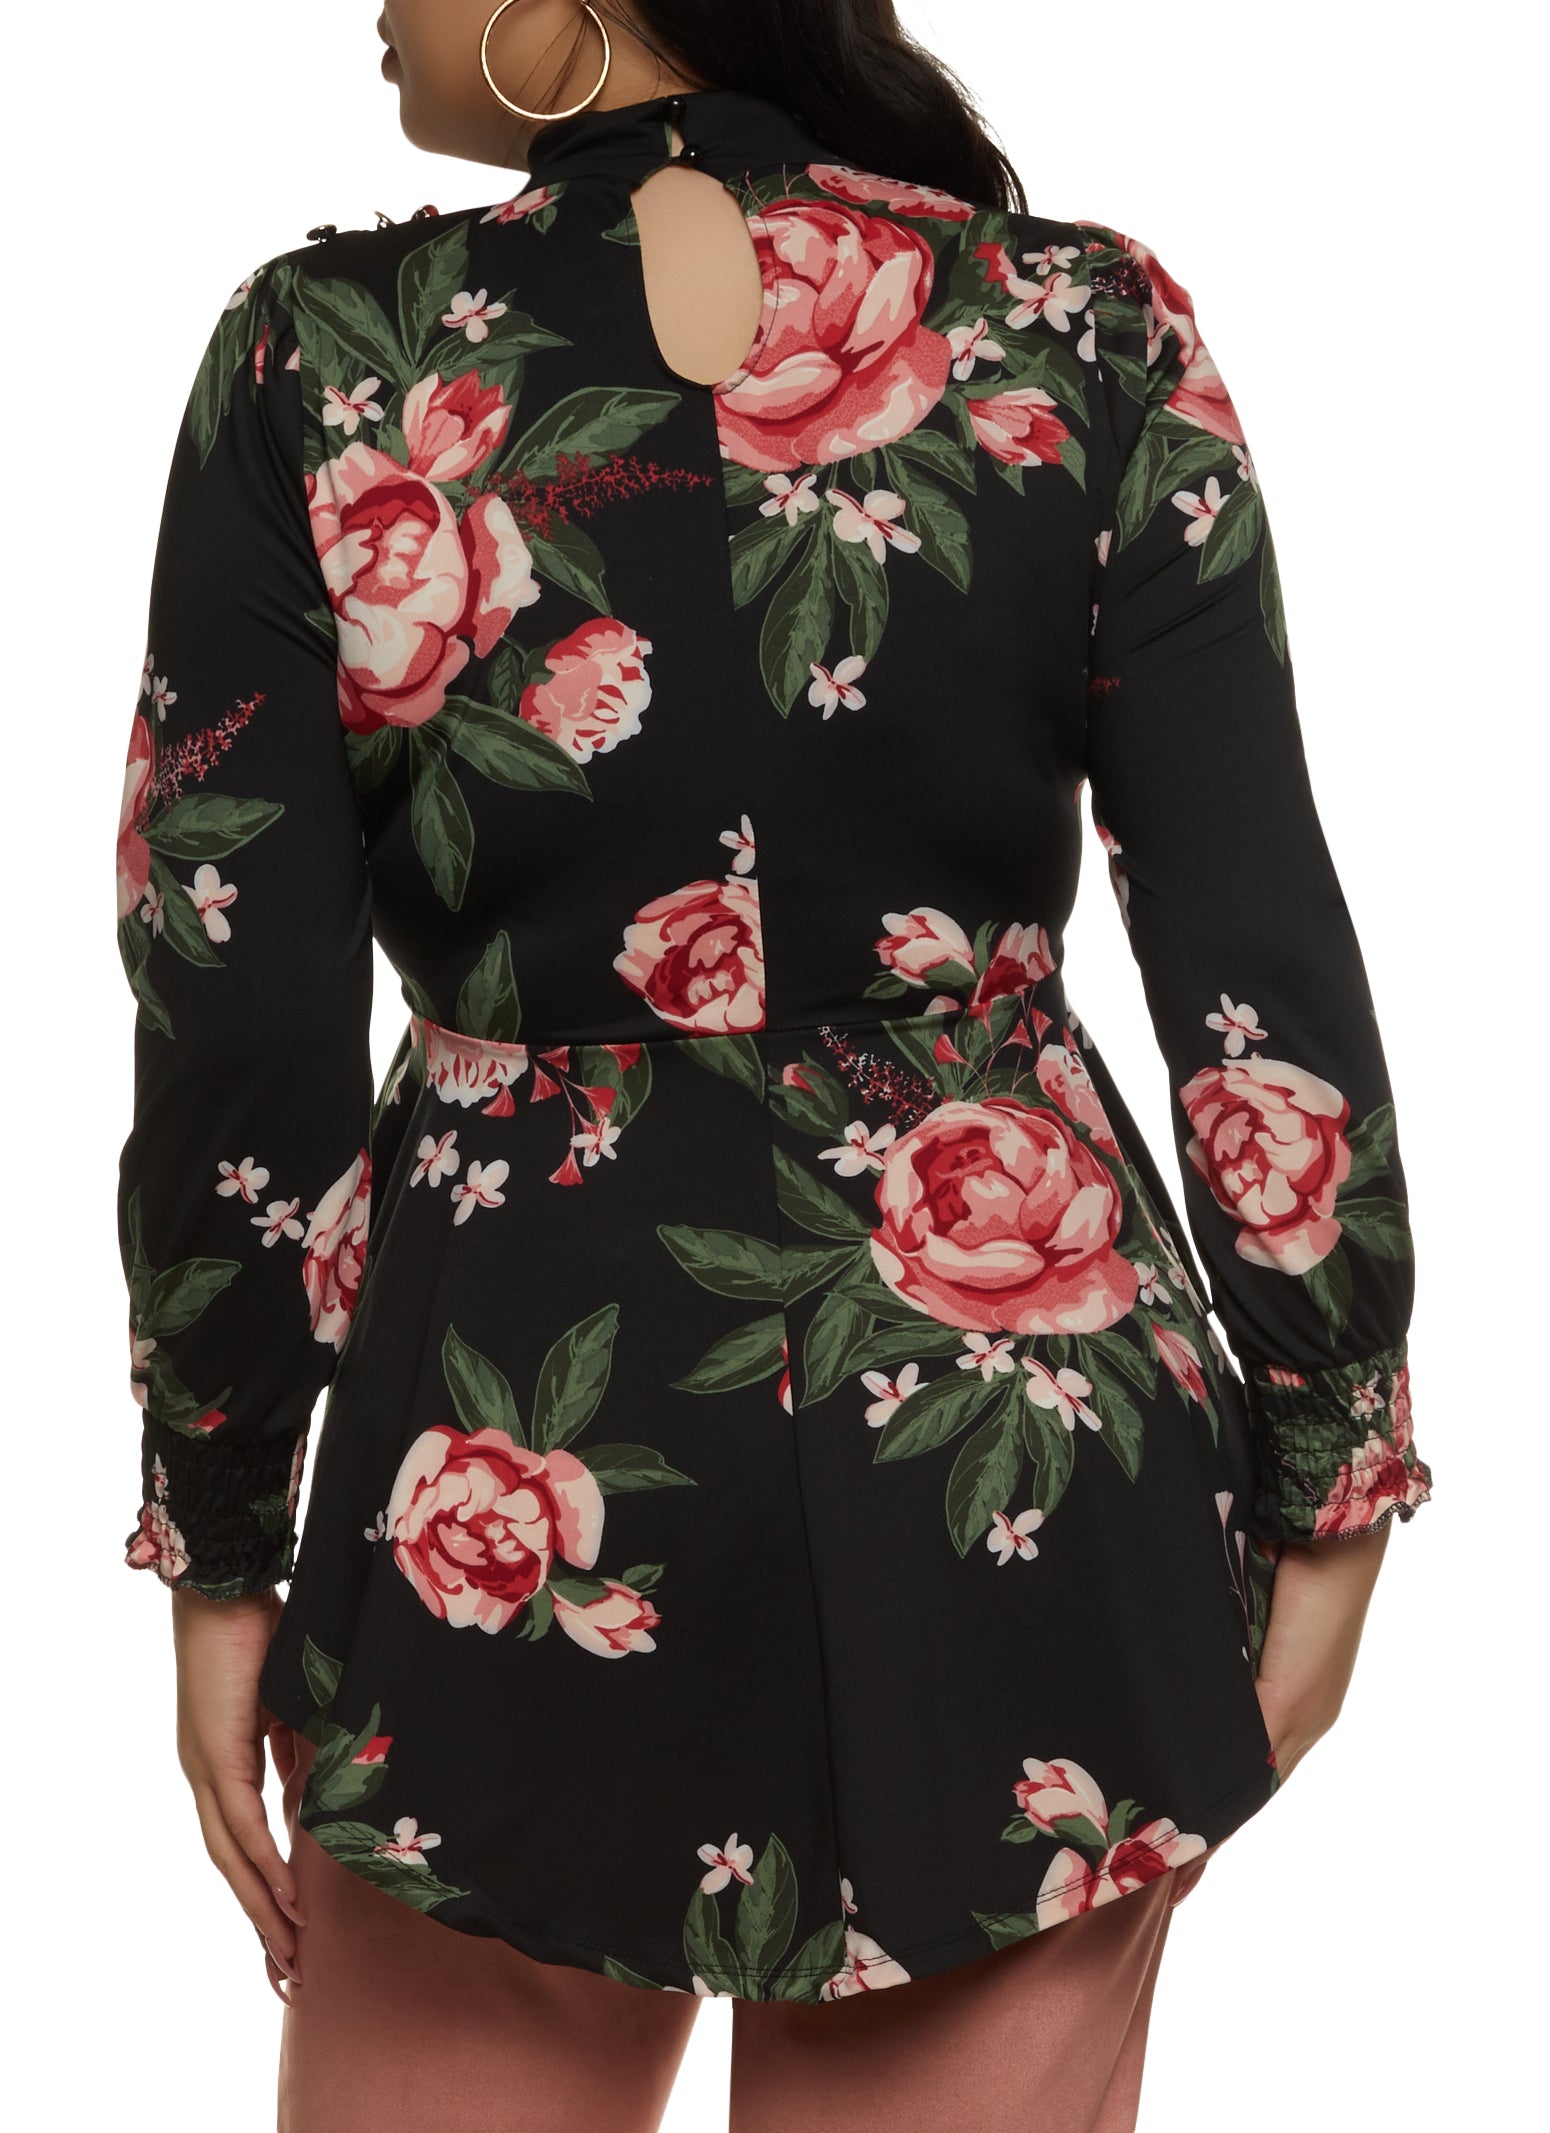 Plus Size Floral Peplum Dress - Black